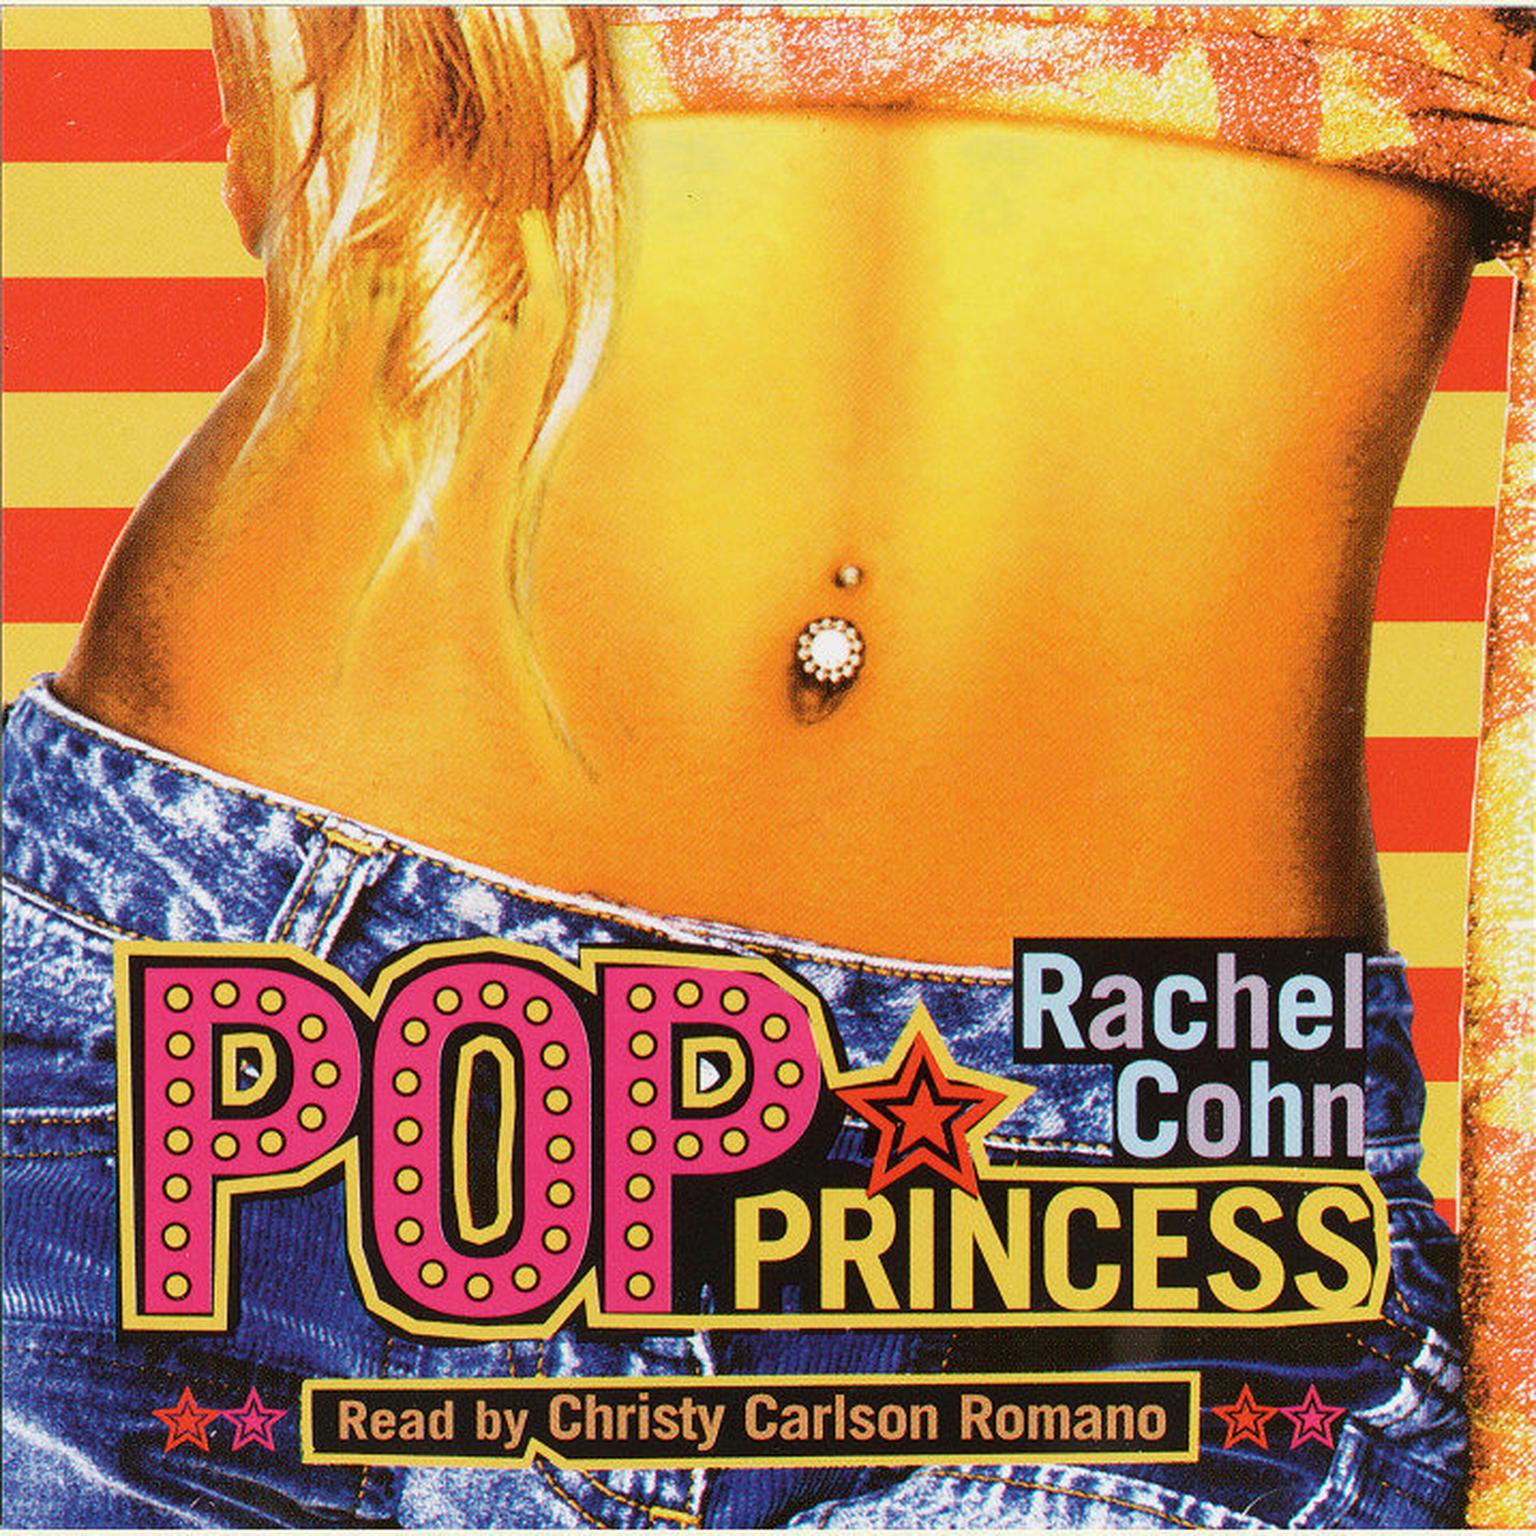 Pop Princess (Abridged) Audiobook, by Rachel Cohn